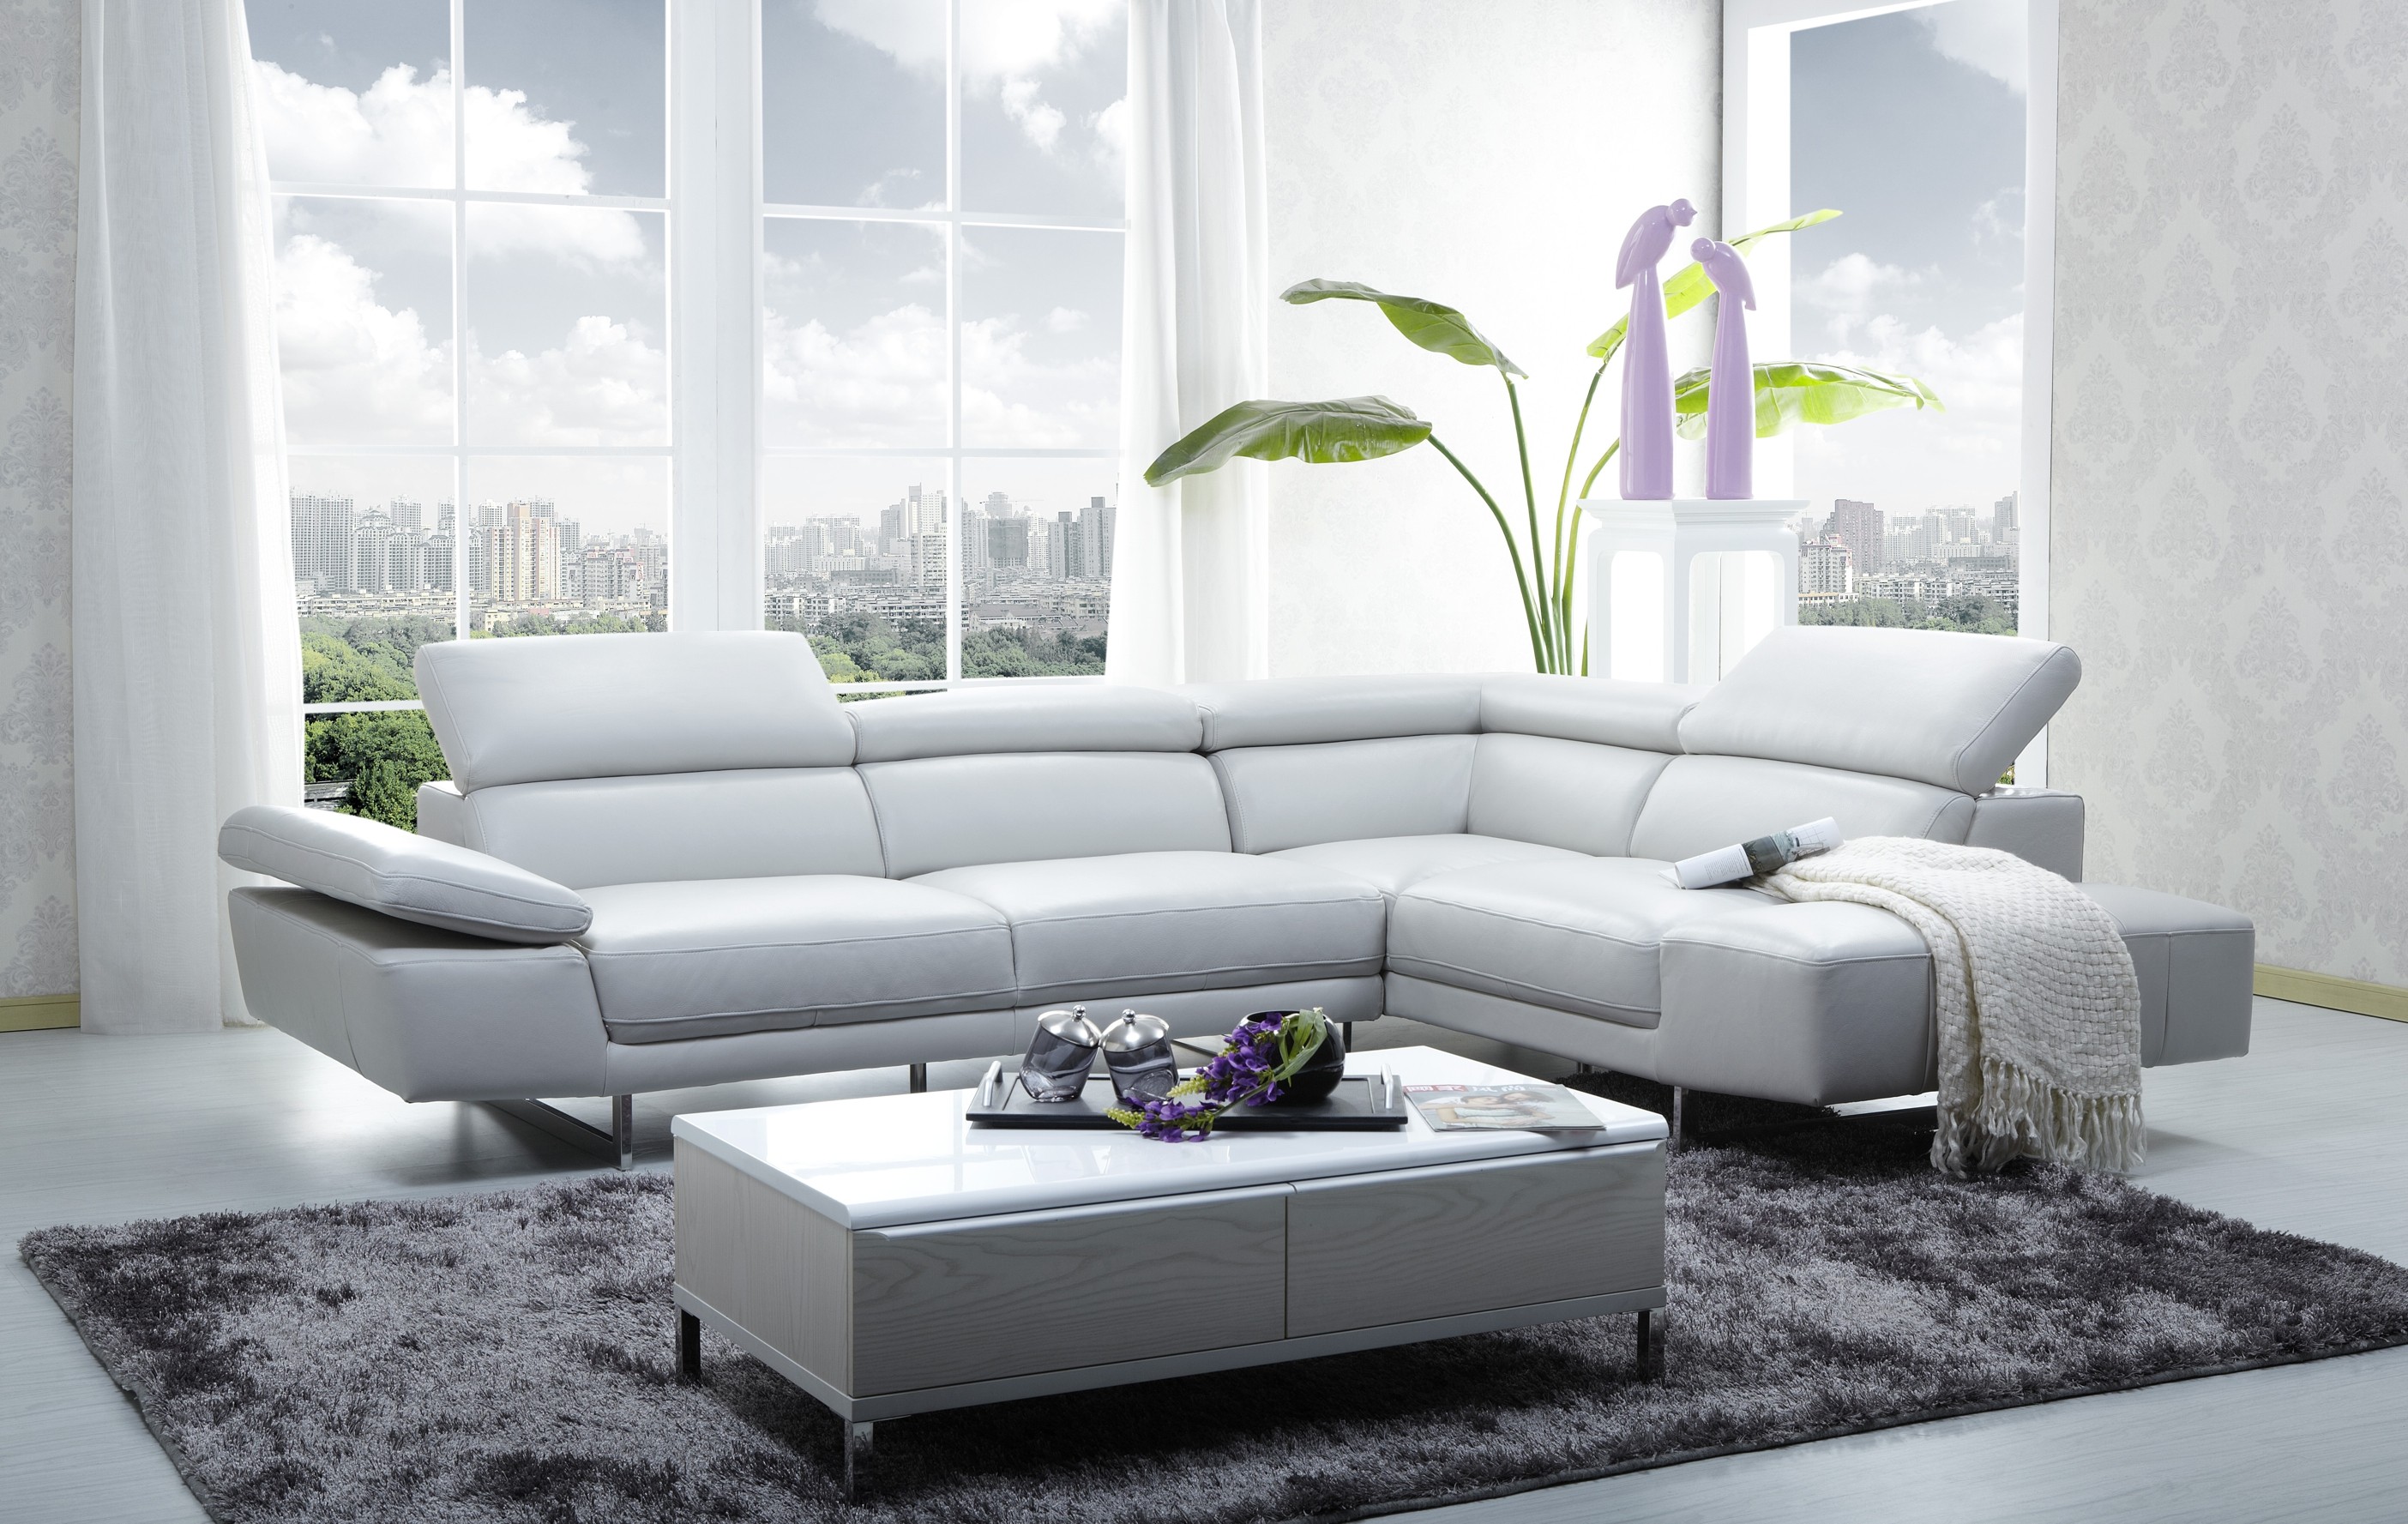 CADO Modern Furniture - 1717 Italian Leather Modern Sectional Sofa